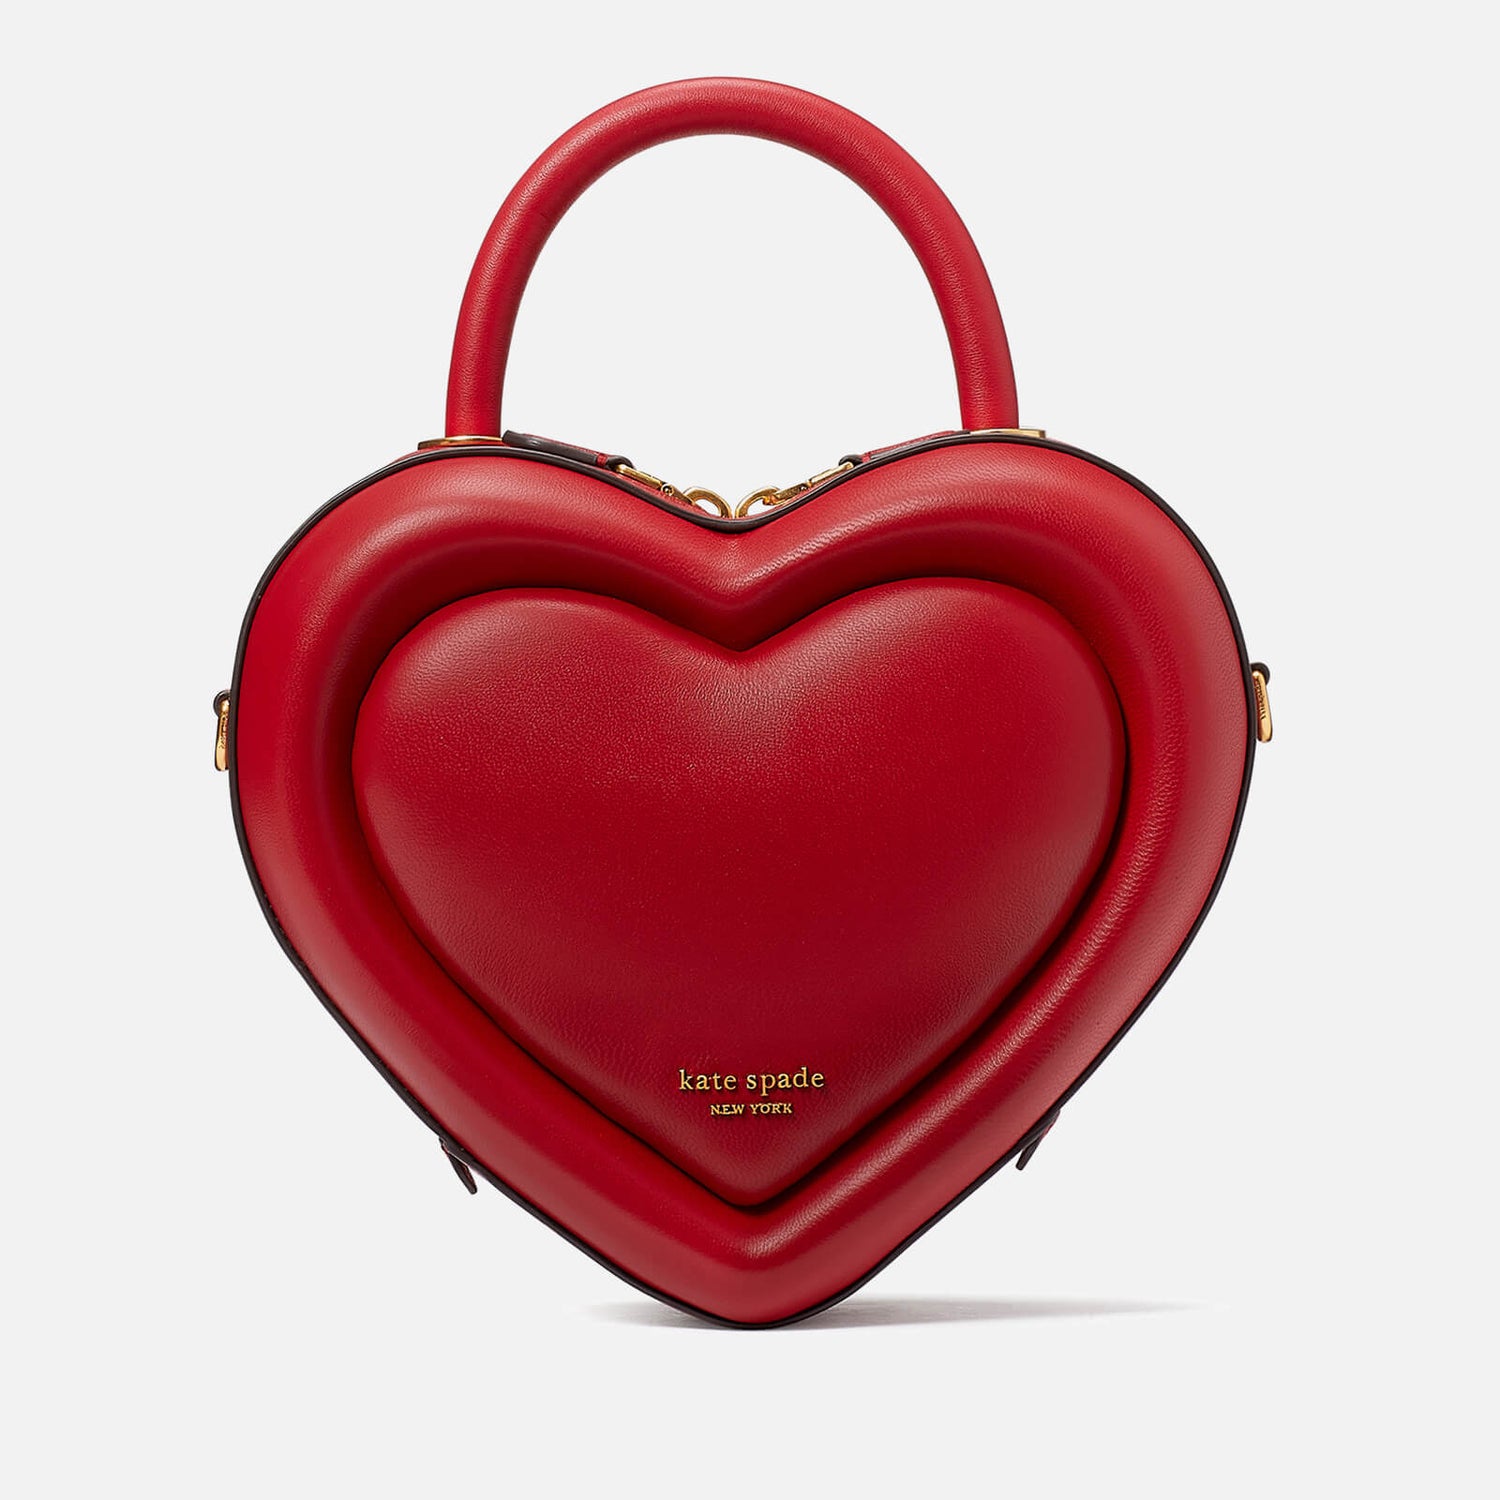 Kate Spade New York Pitter Patter Heart Leather Bag | TheHut.com